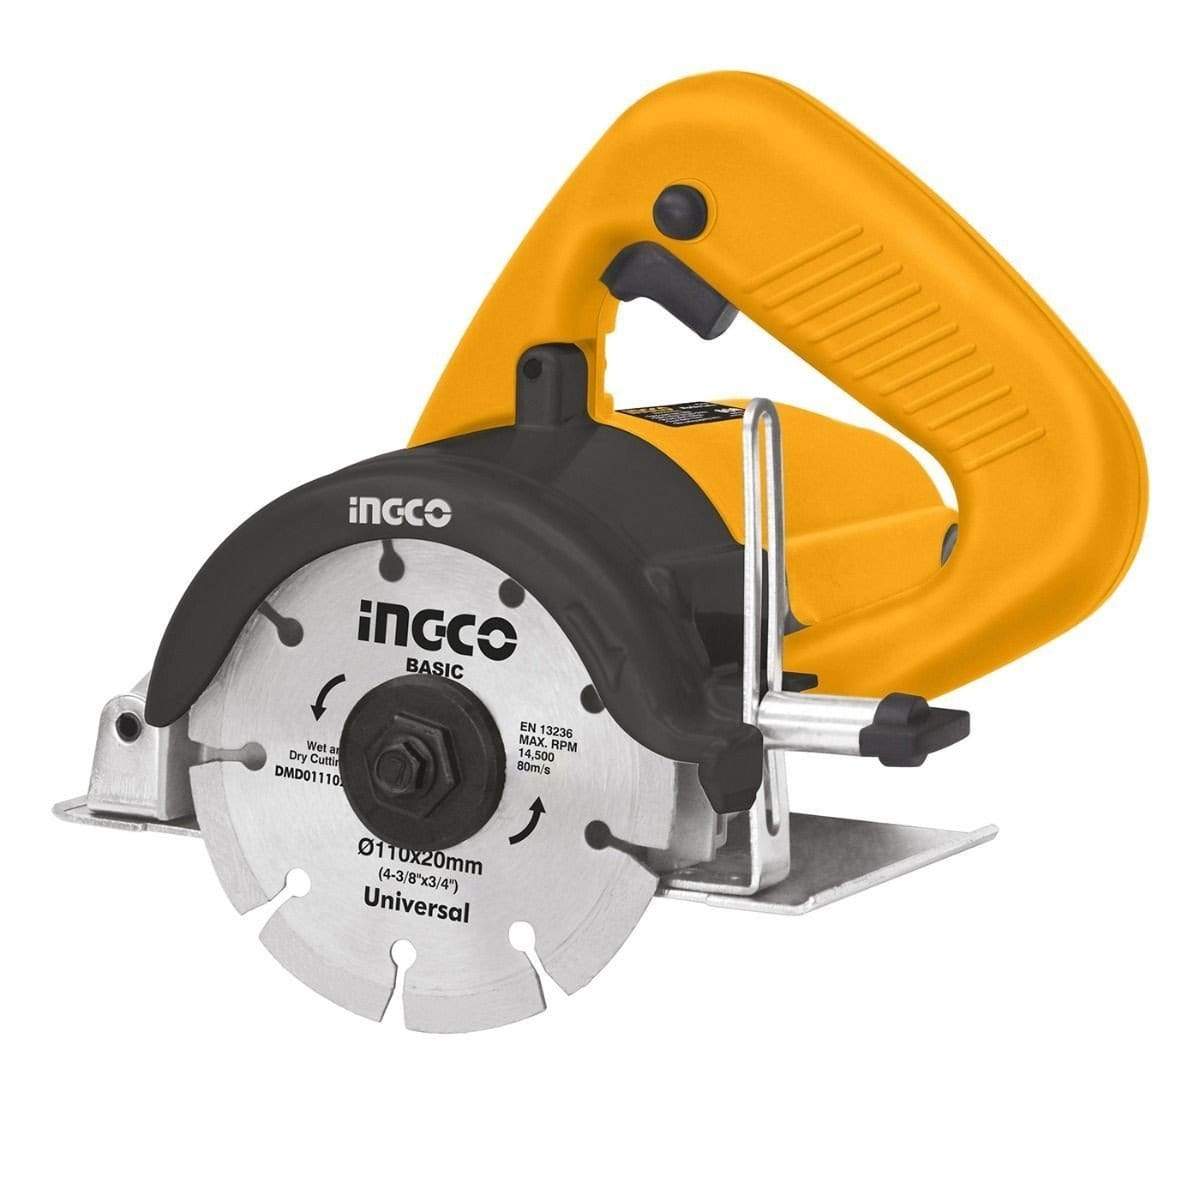 Ingco Marble Cutter 1400W - MC14008